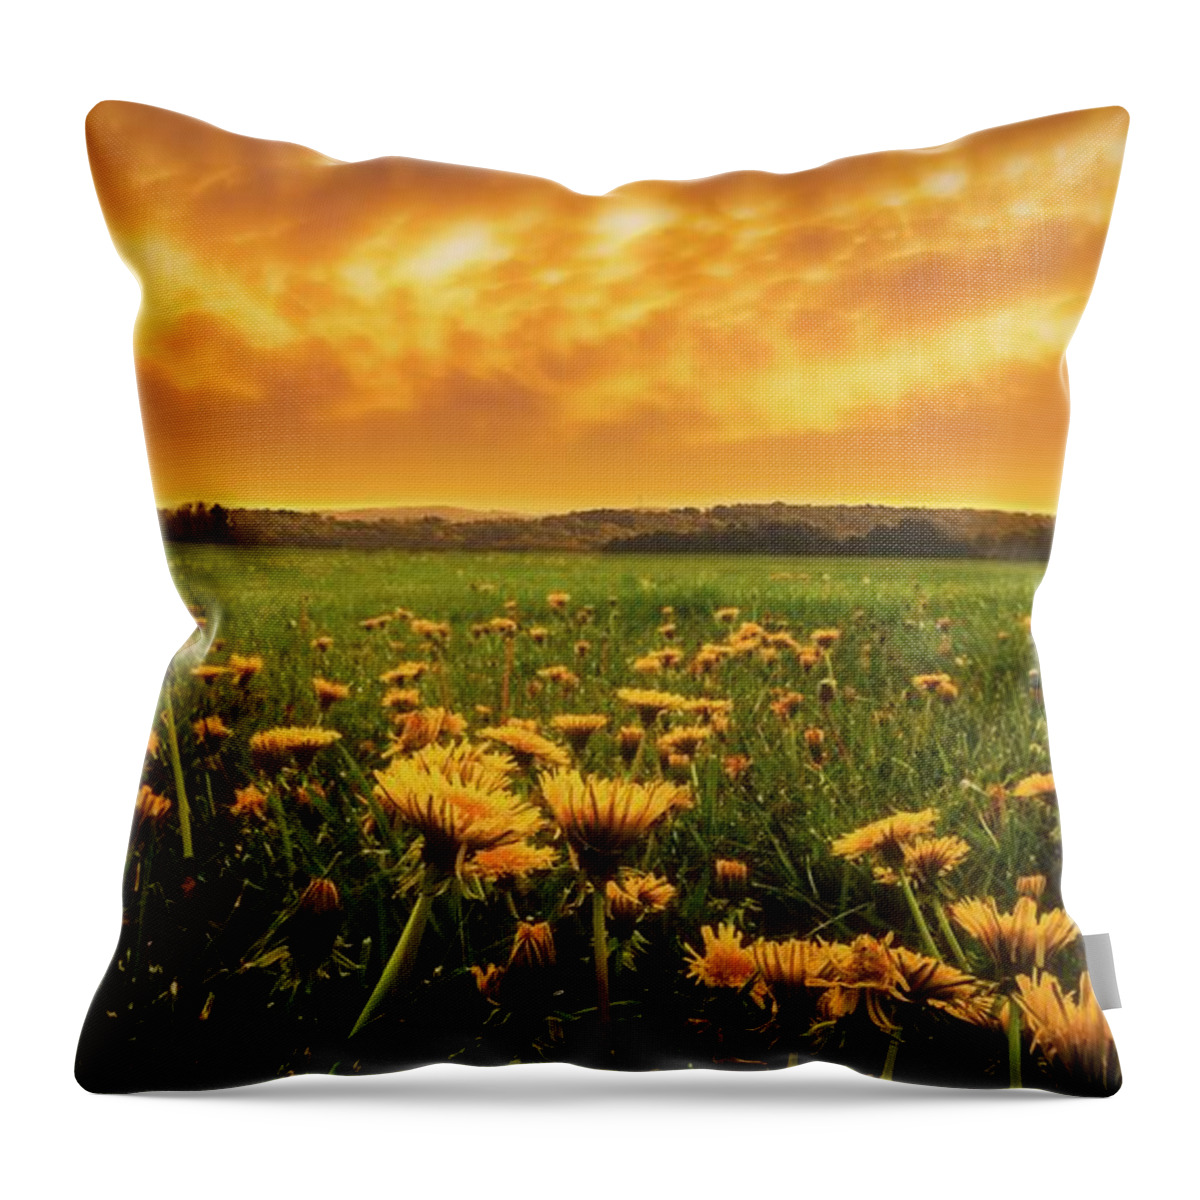 Dandelion Throw Pillow featuring the photograph Dandelion Field Under Fiery Sky by Jason Fink